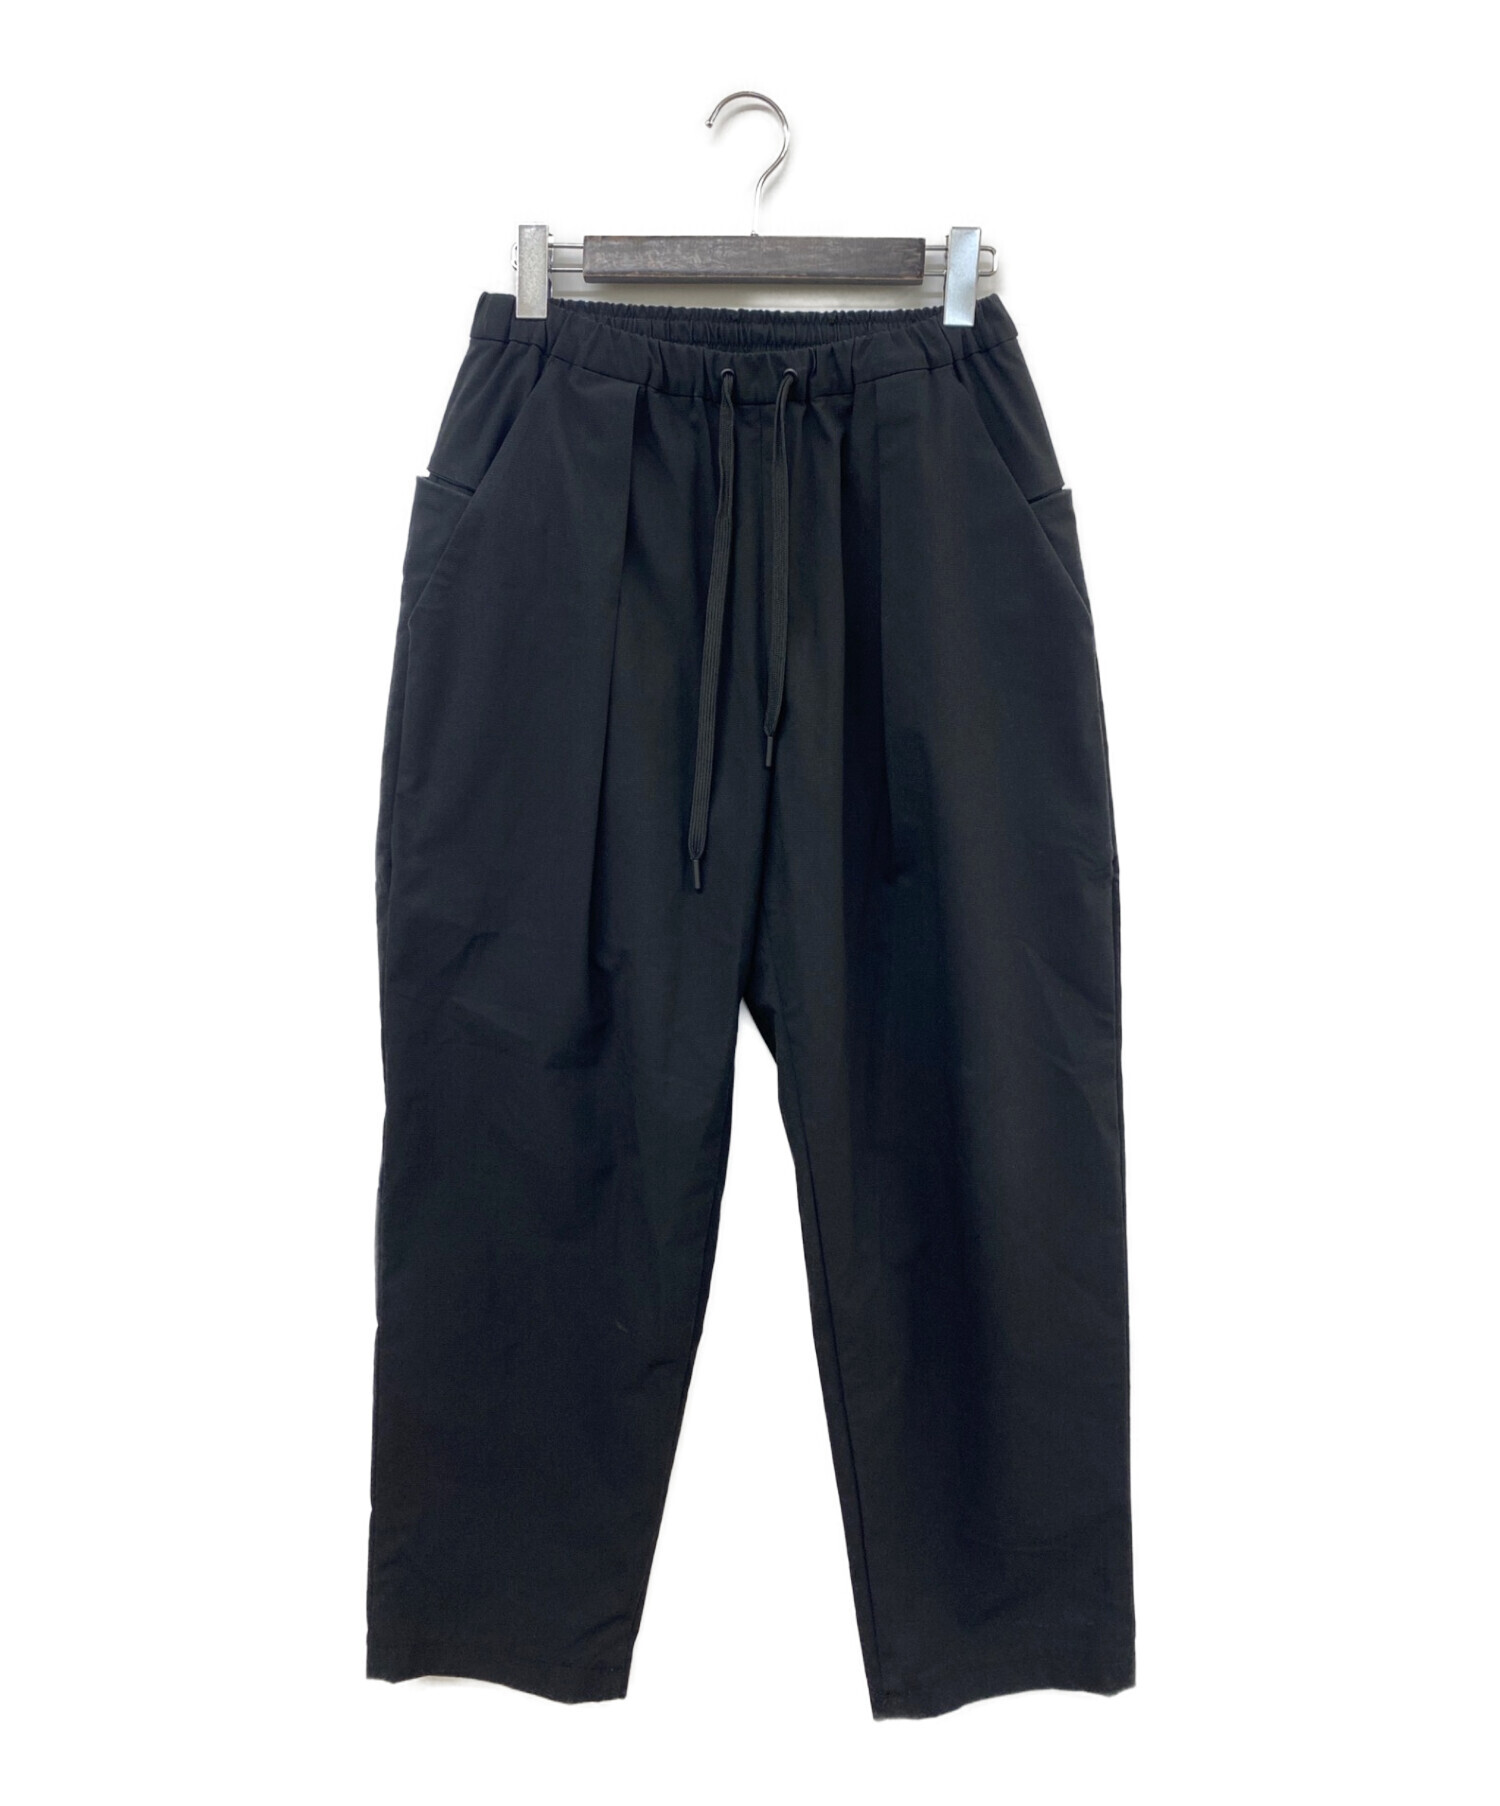 TEATORA (テアトラ) Wallet Pants RESORT SM ウォレットパンツ ブラック サイズ:3